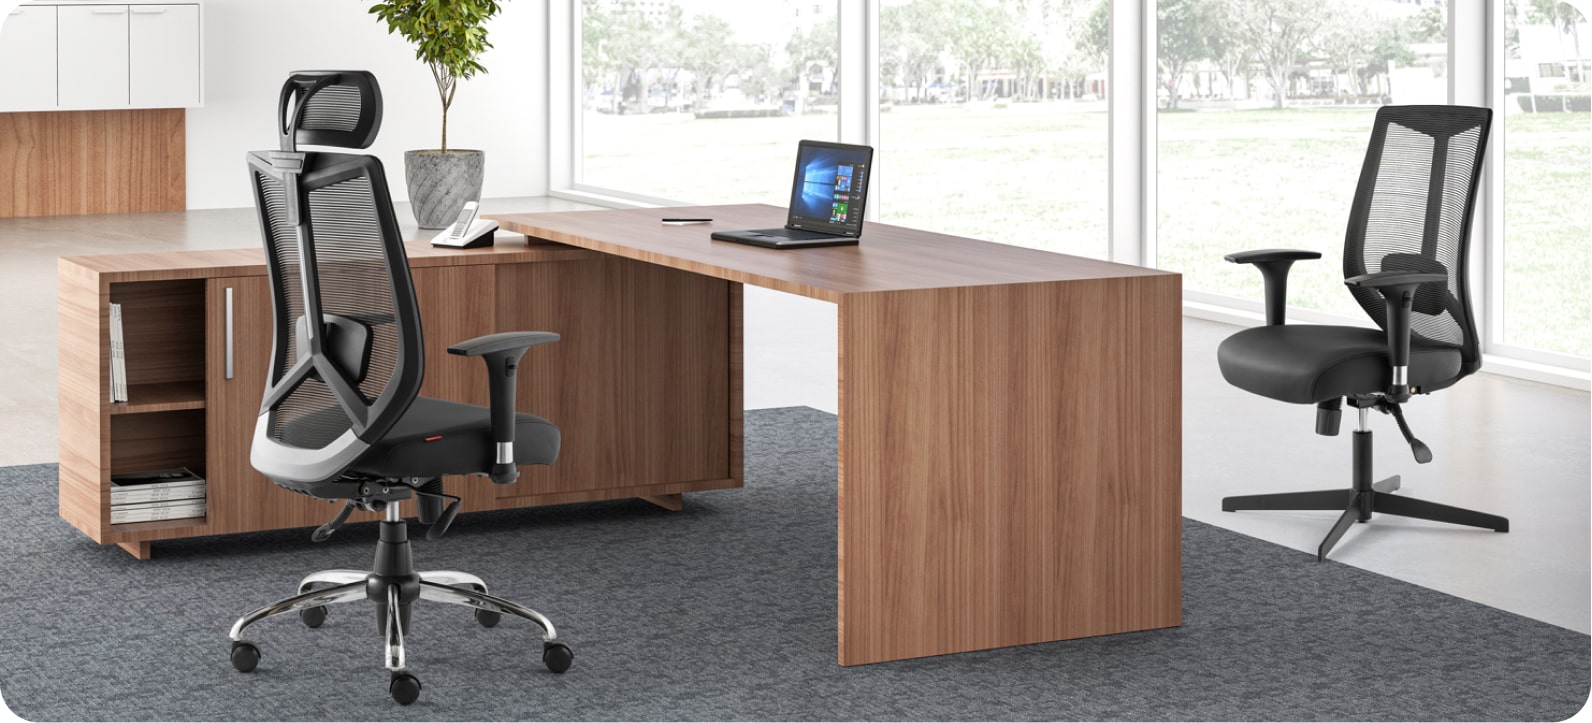 Office Furniture 1401-9-8-Cus 01-min